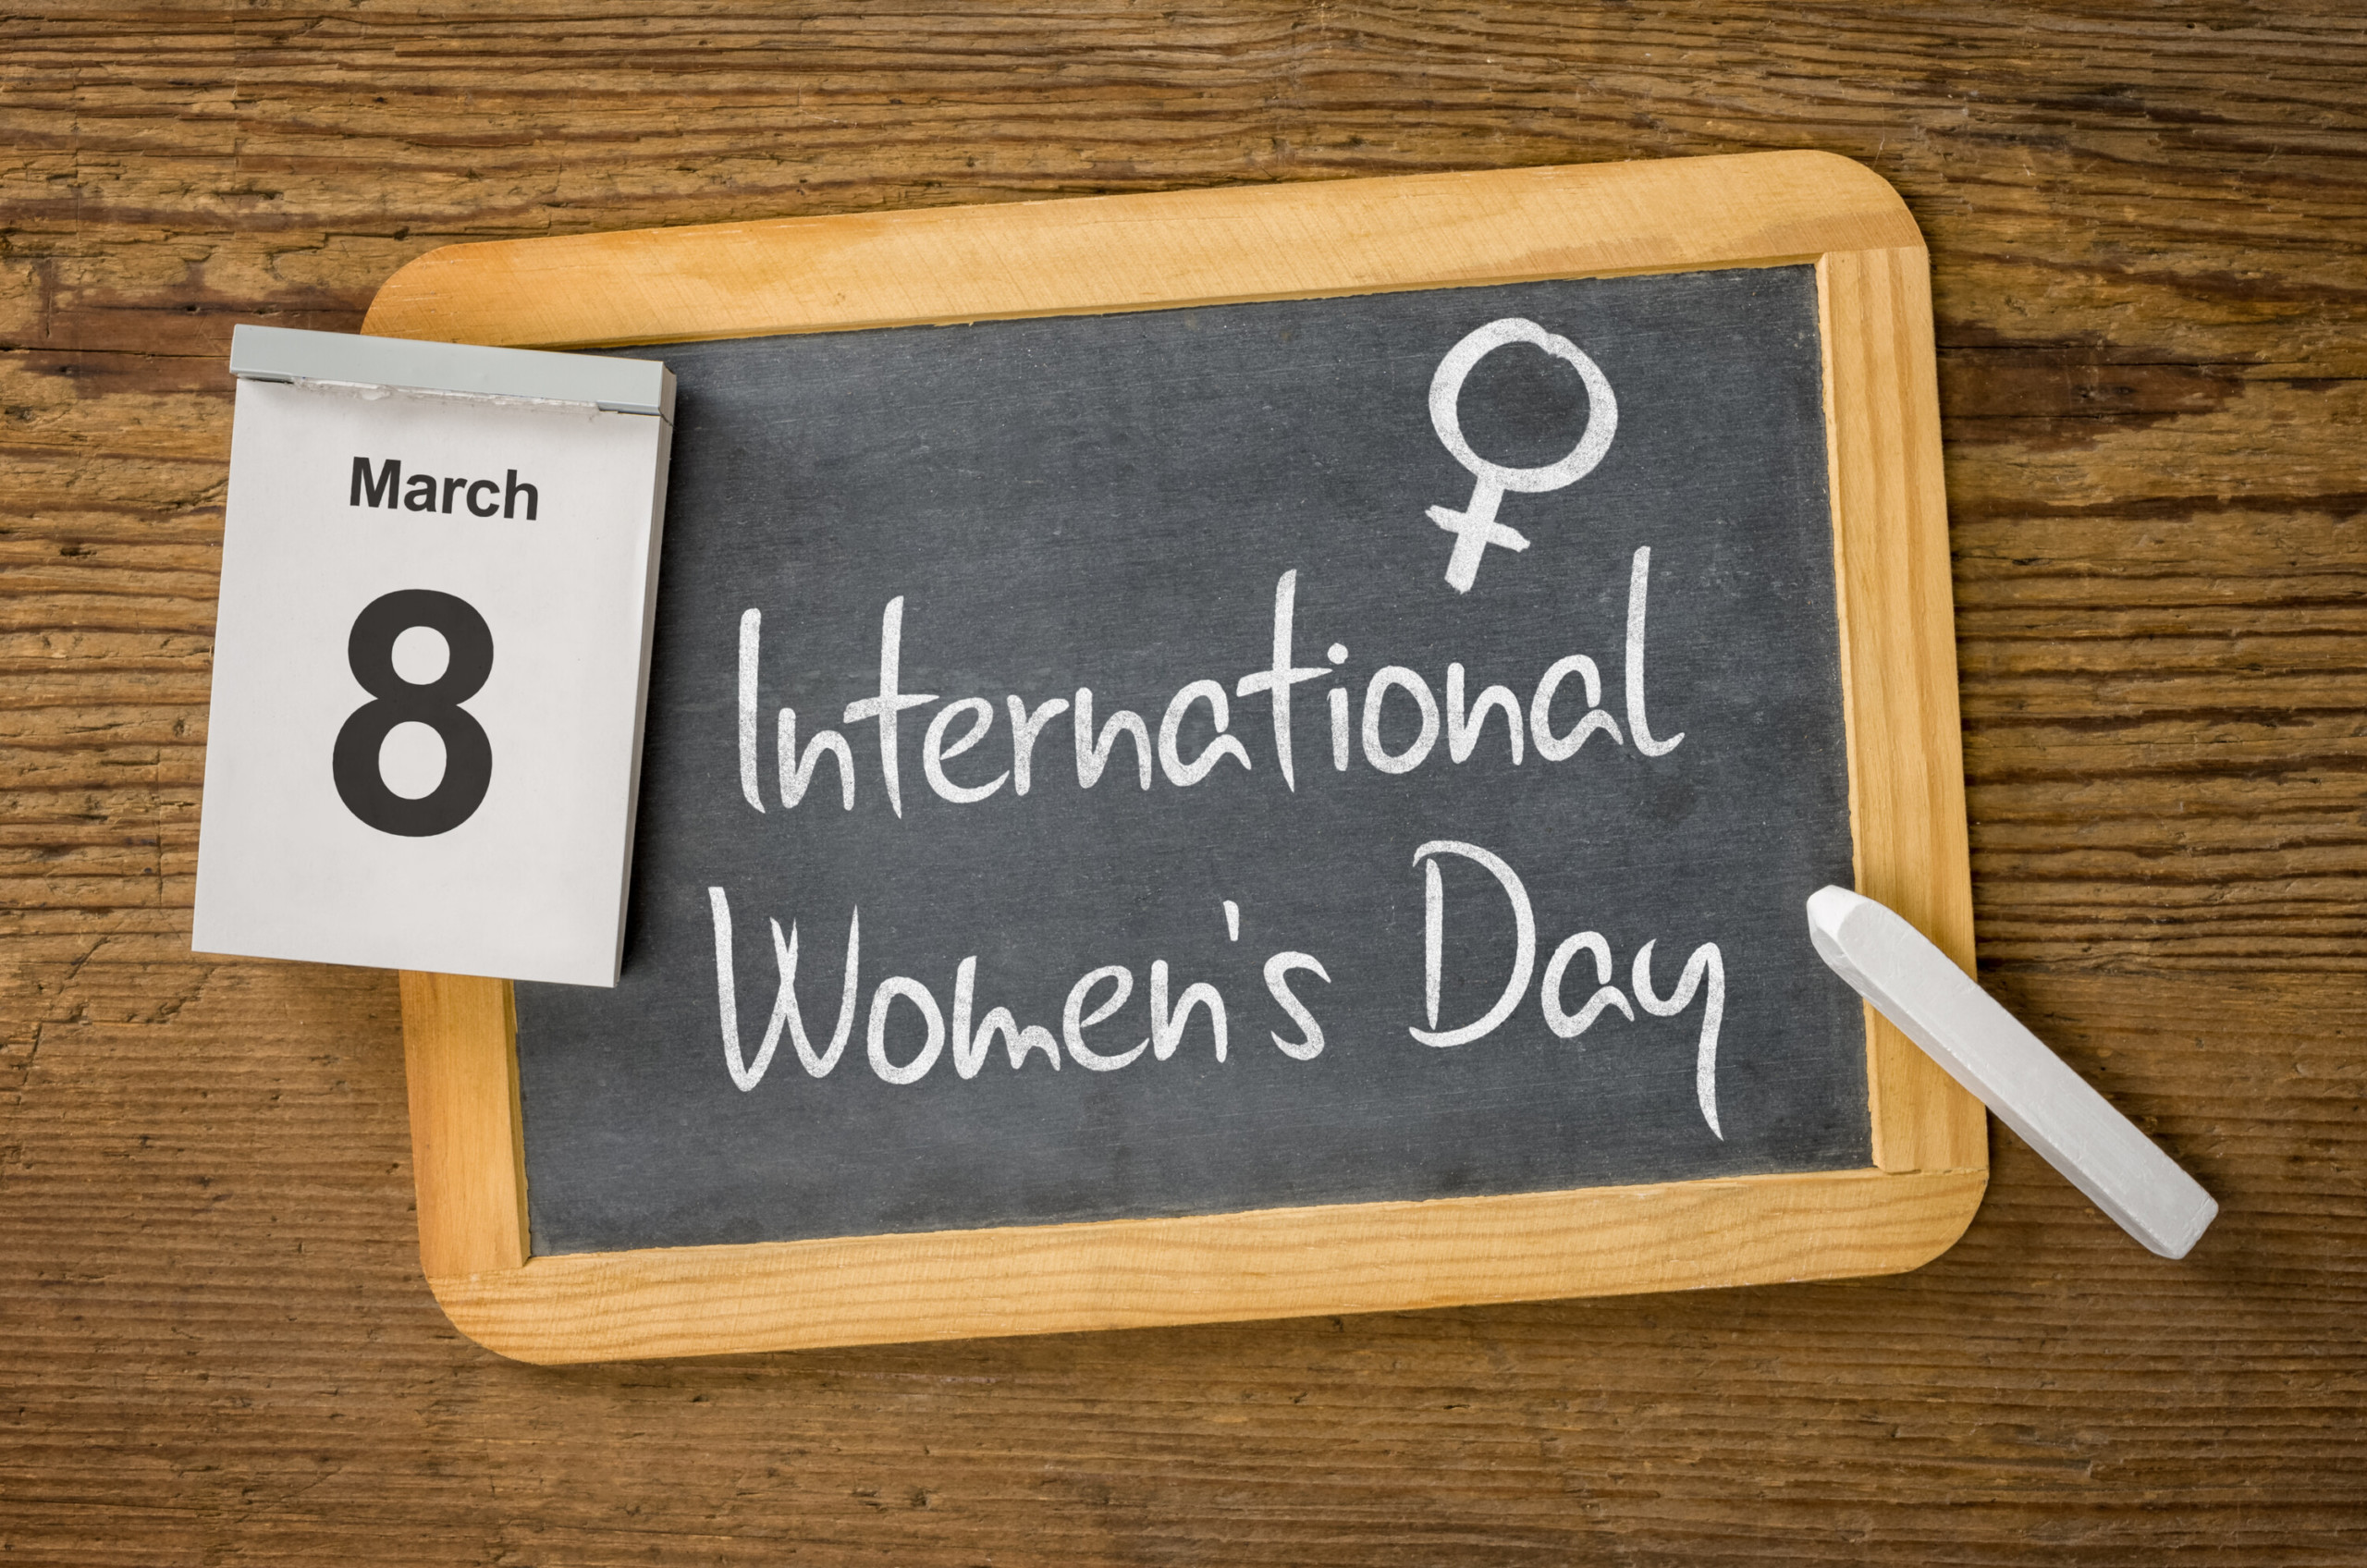 Bruce County Women’s Day event to inspire female entrepreneurs